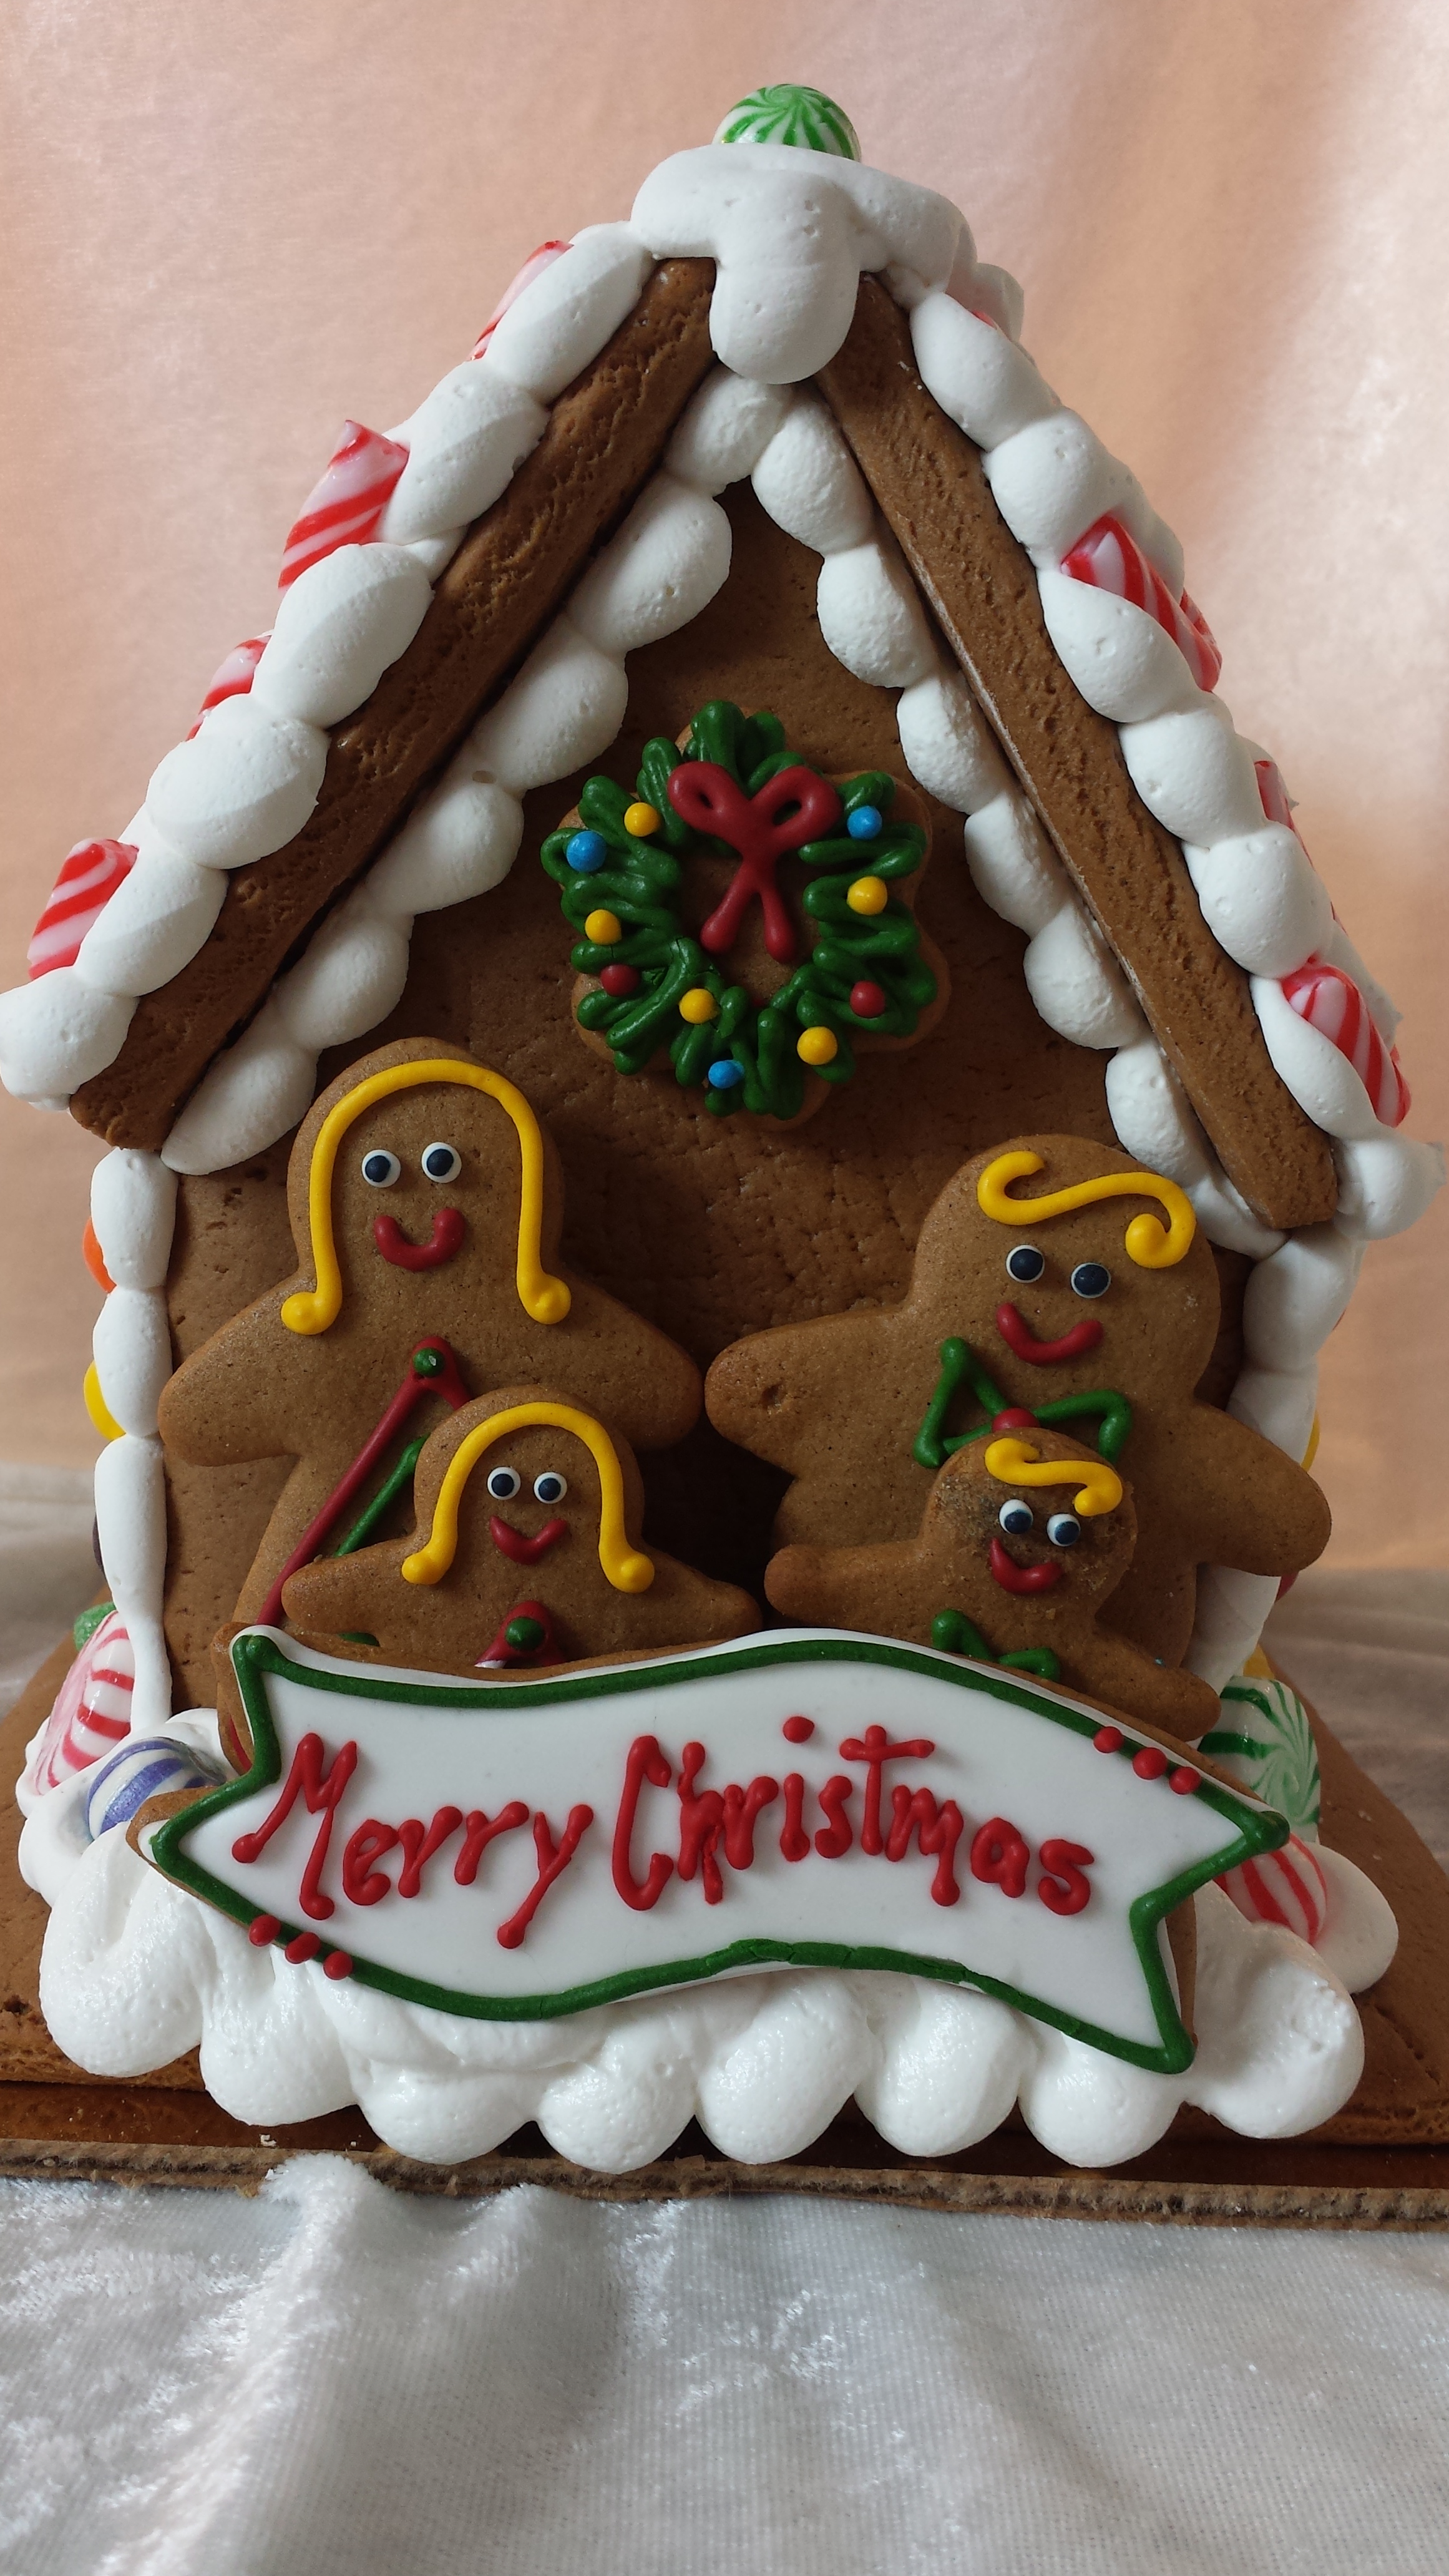 Gingerbread House Cakes - Petite Haus